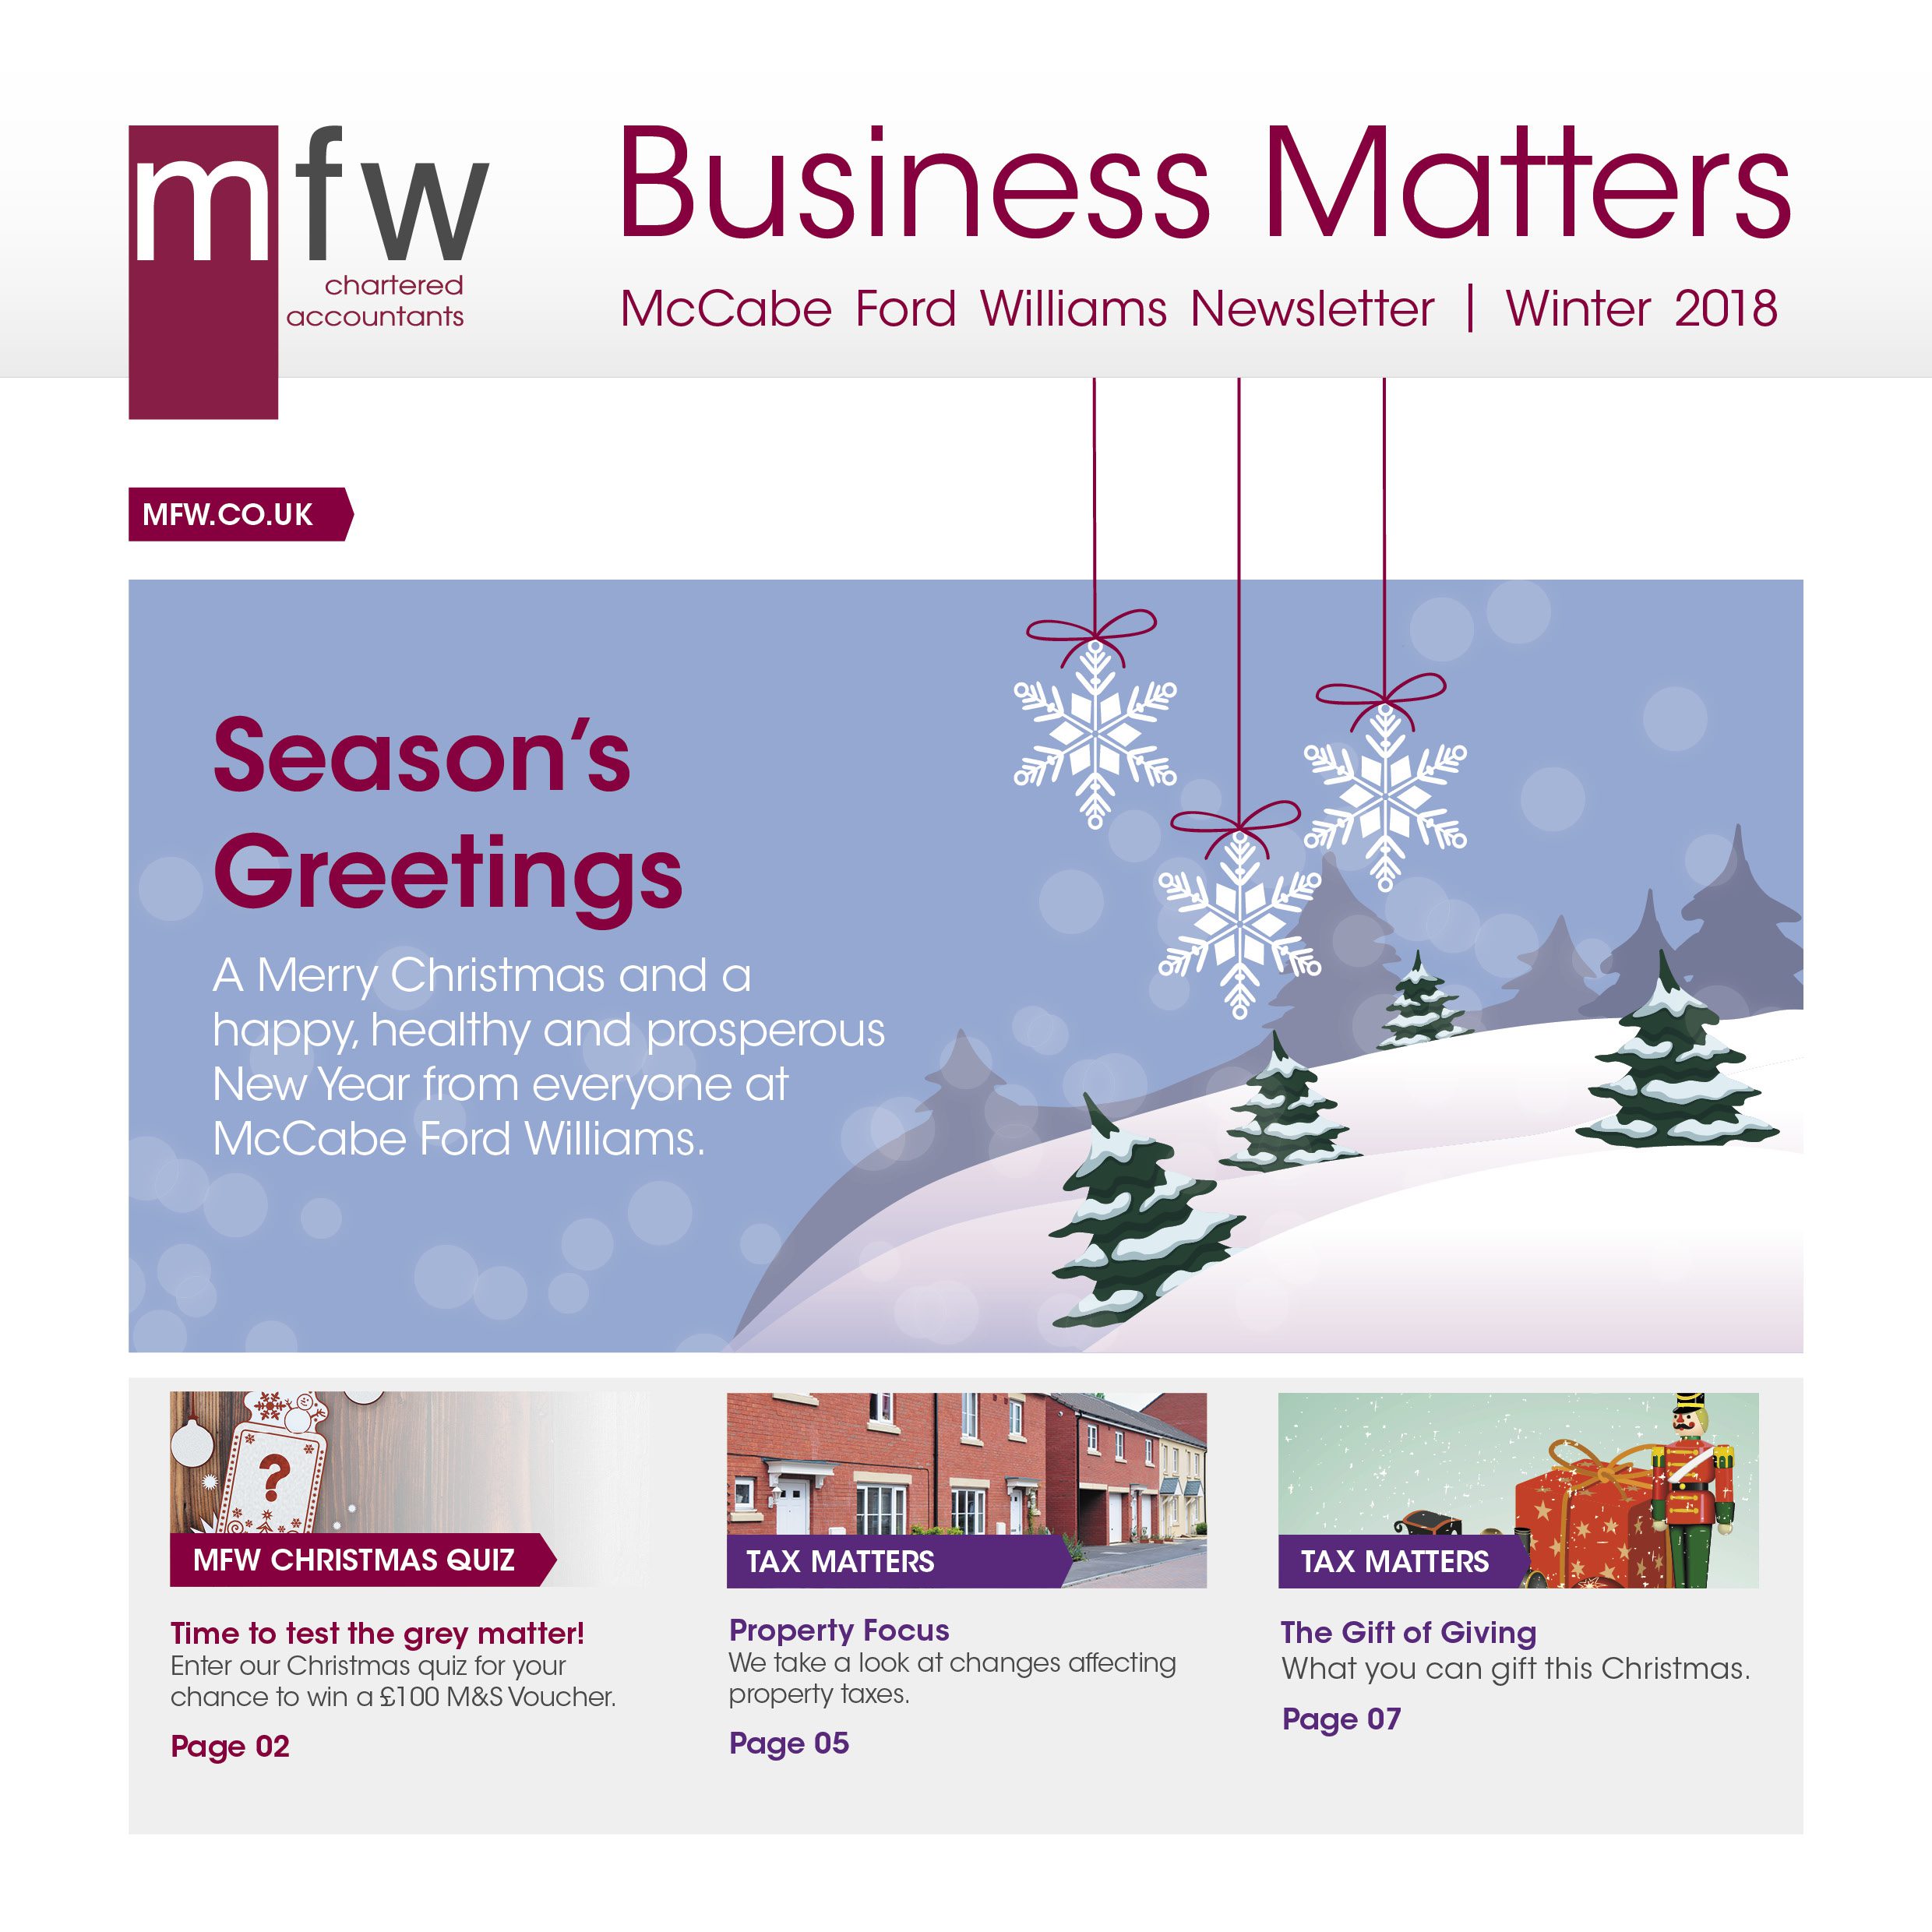 MFW Business Matters winter 2018